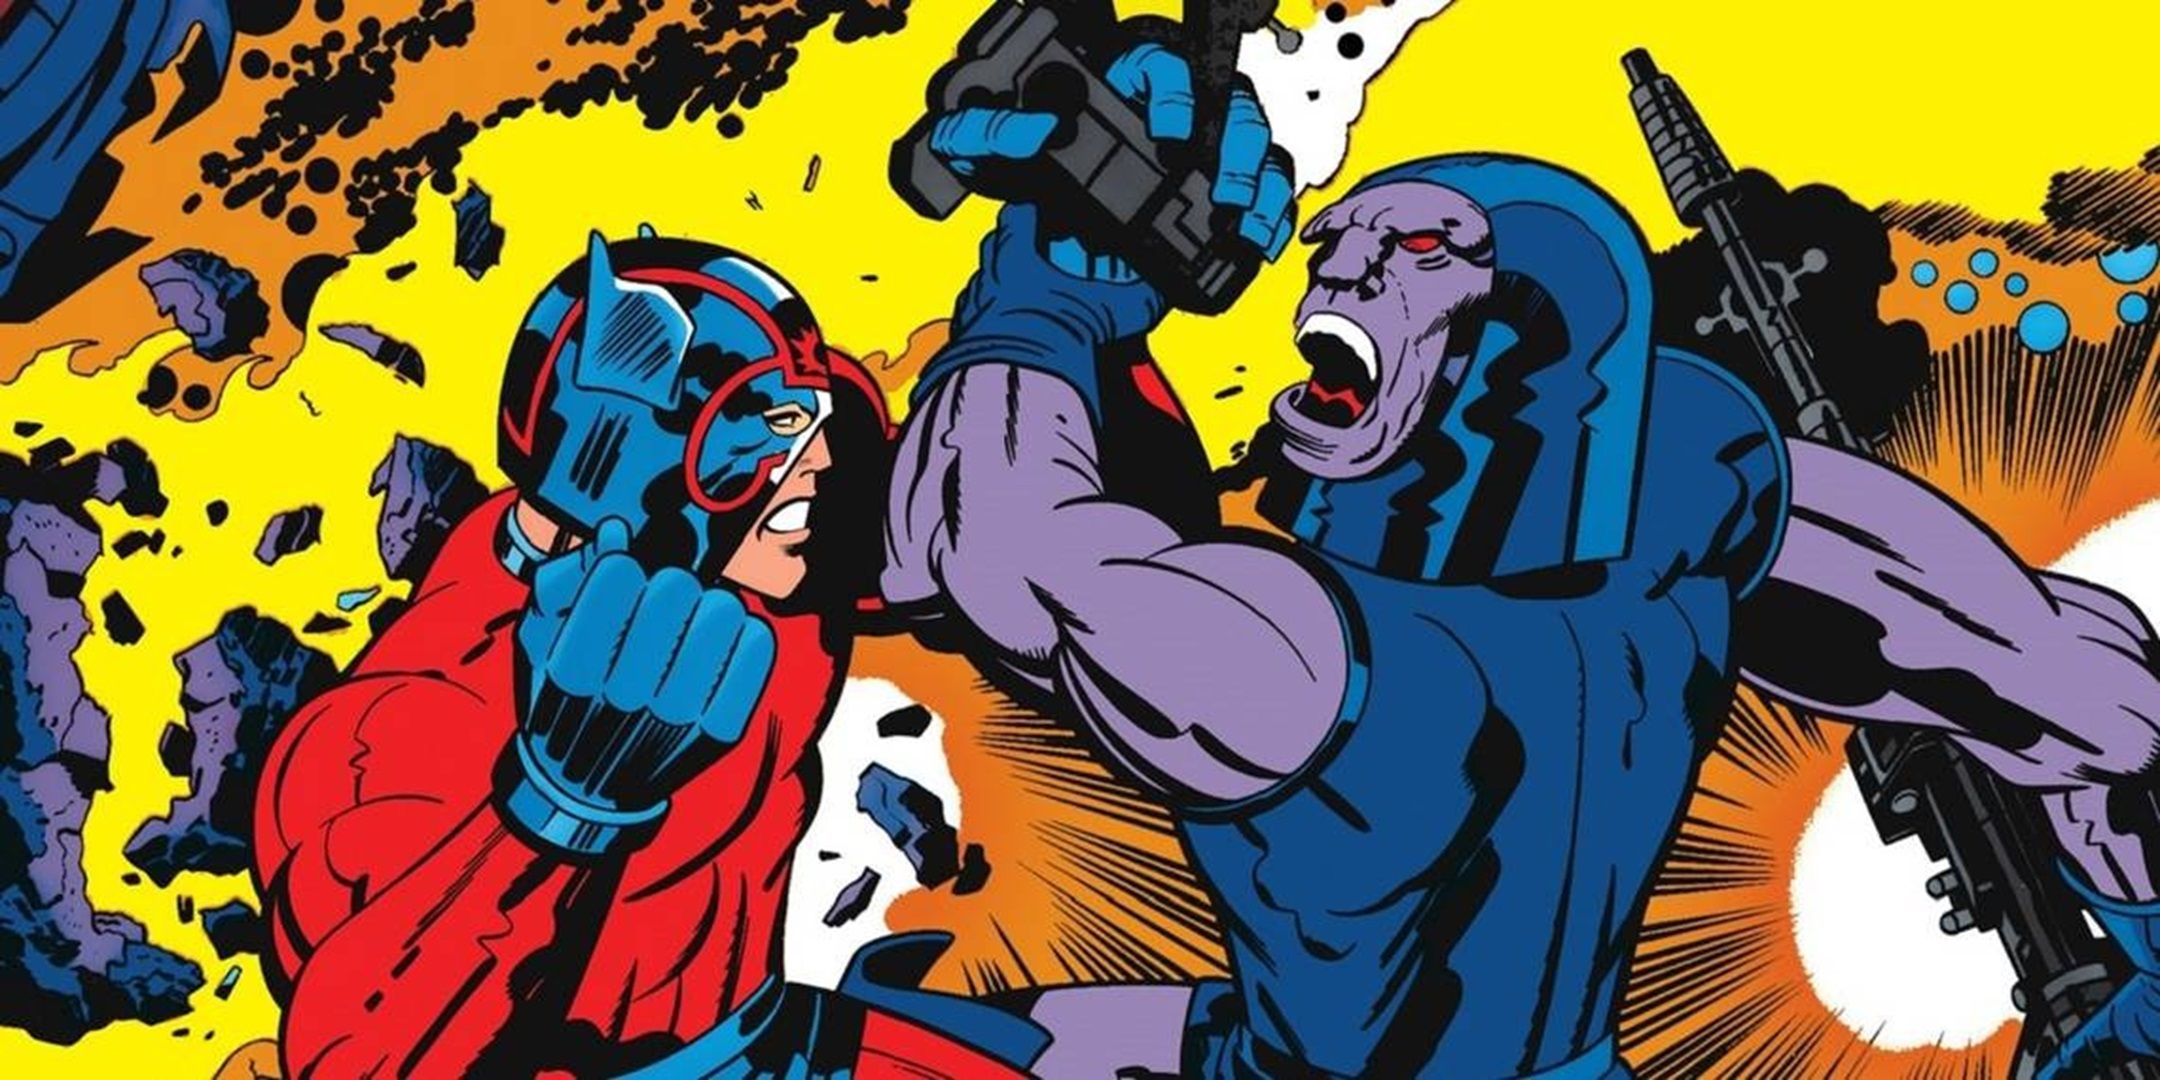 Orion fights Darkseid